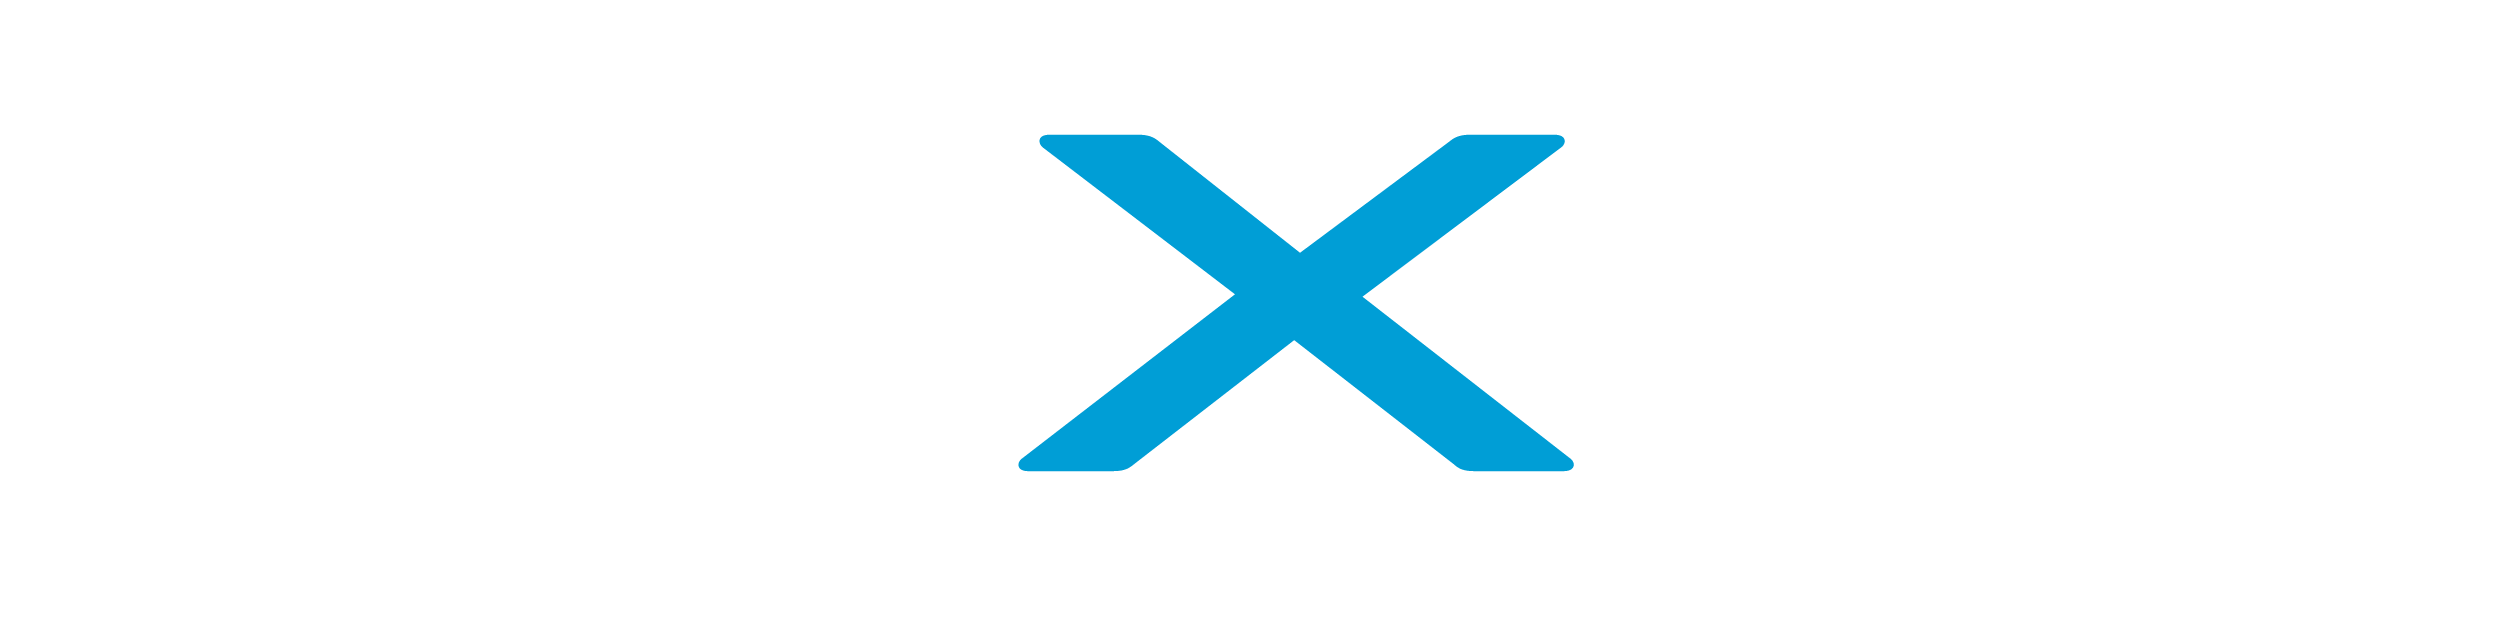 Body Express Personal Training Logo